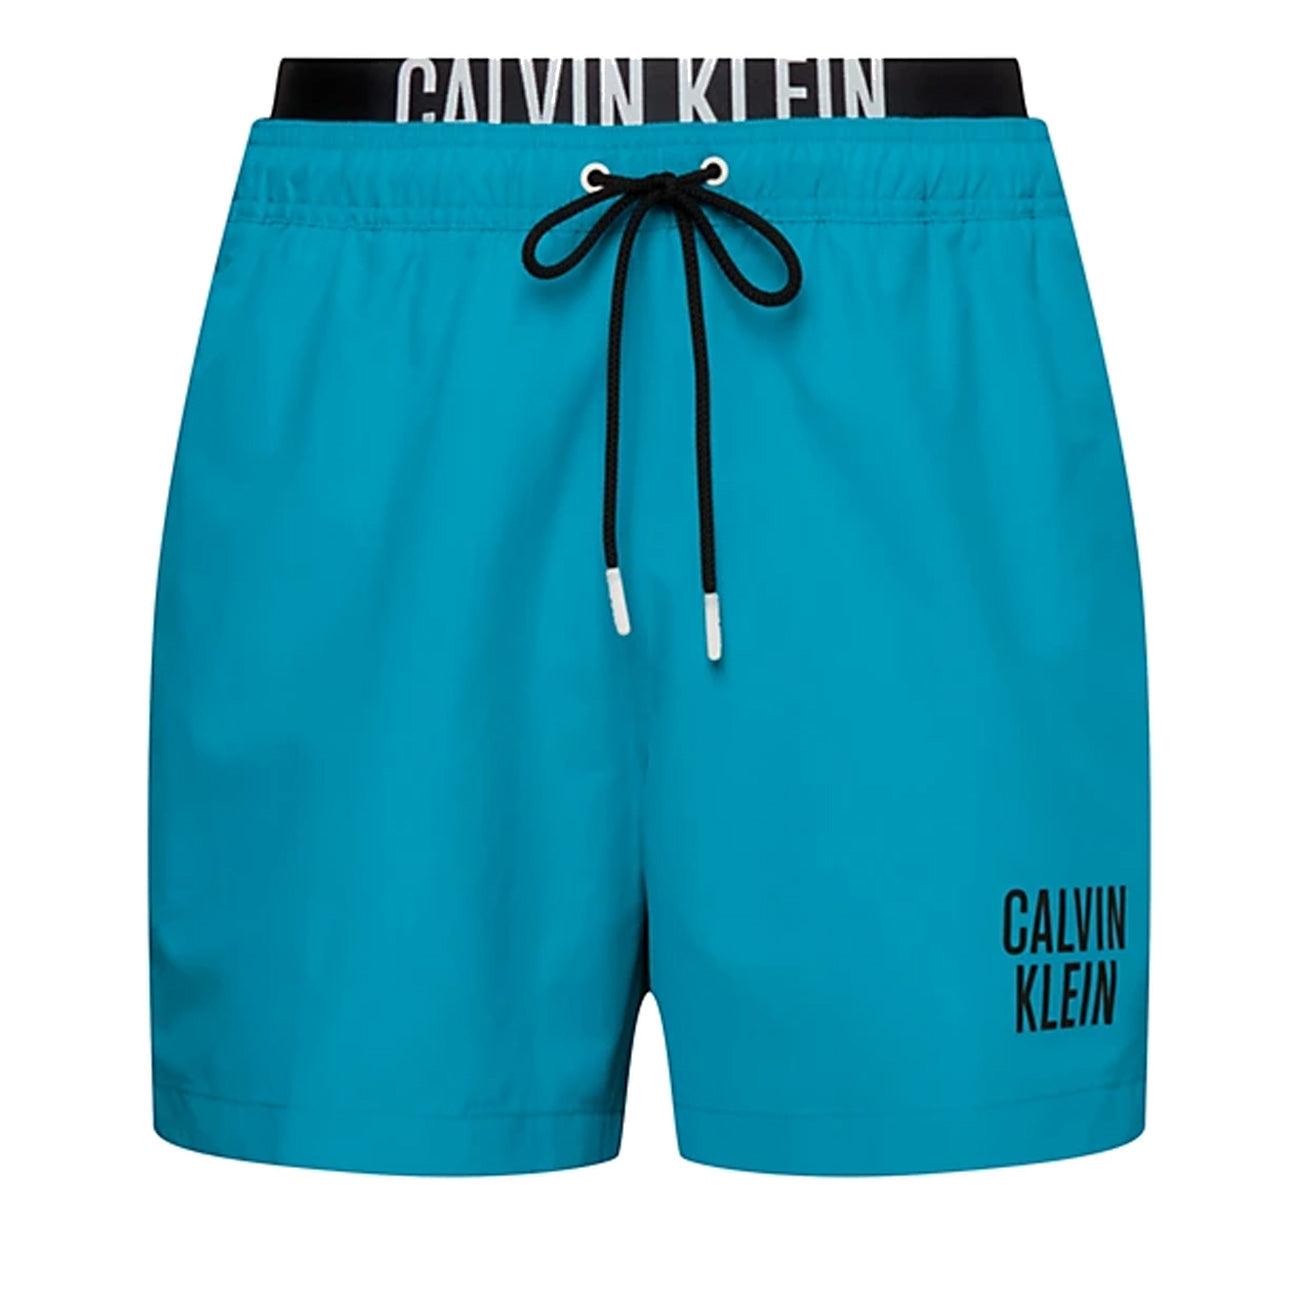 Calvin Klein Swimshort Medium Double WB Herren Badehose Clear Turquoise